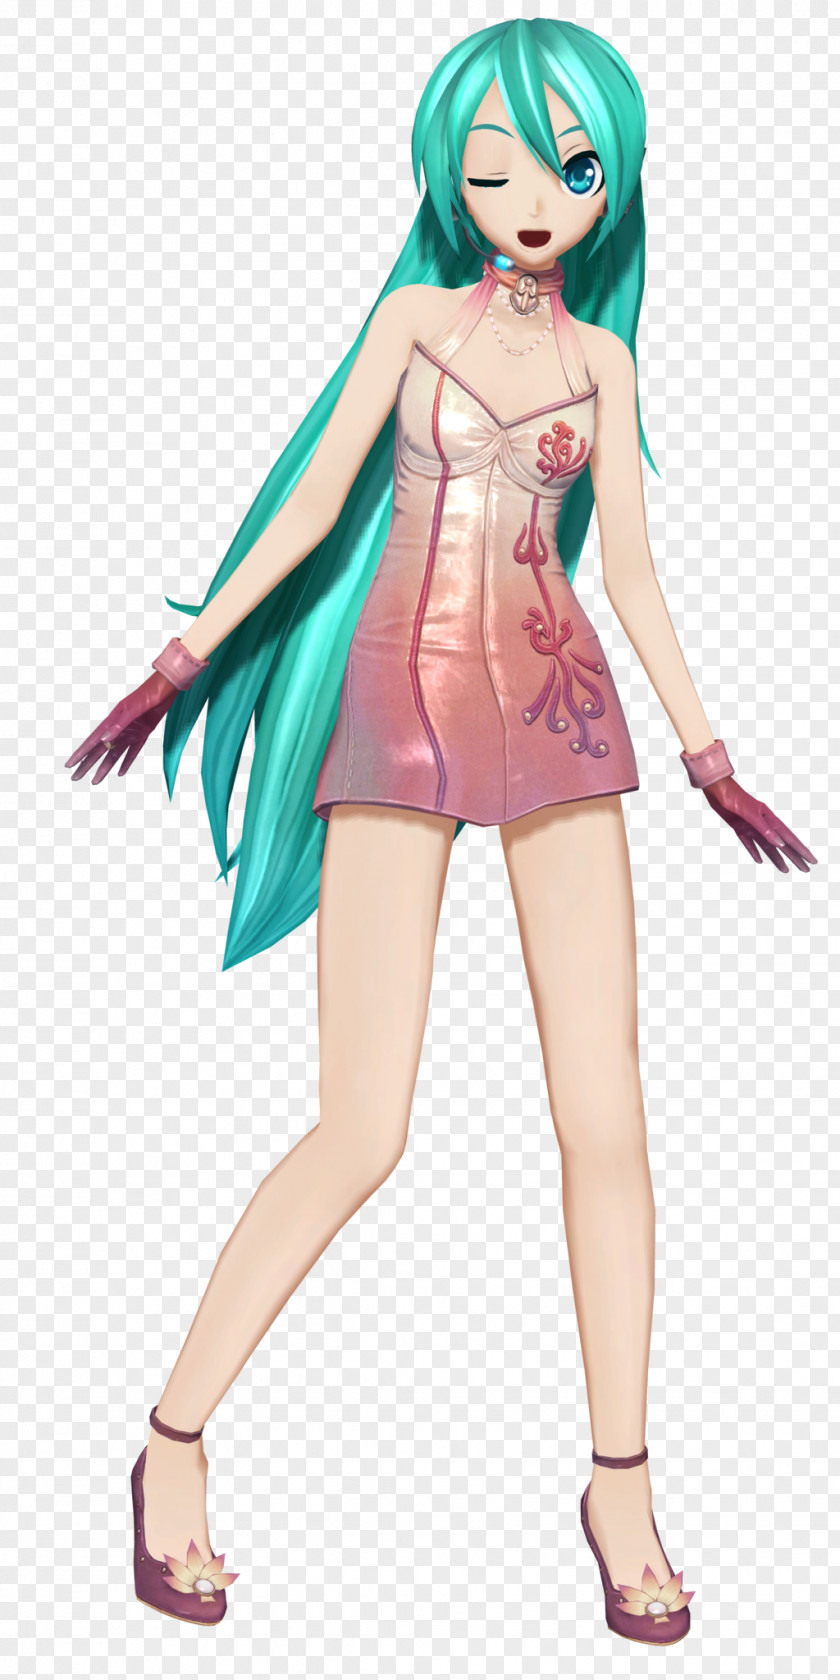 Hatsune Miku Miku: Project DIVA F Sega Vocaloid MikuMikuDance PNG